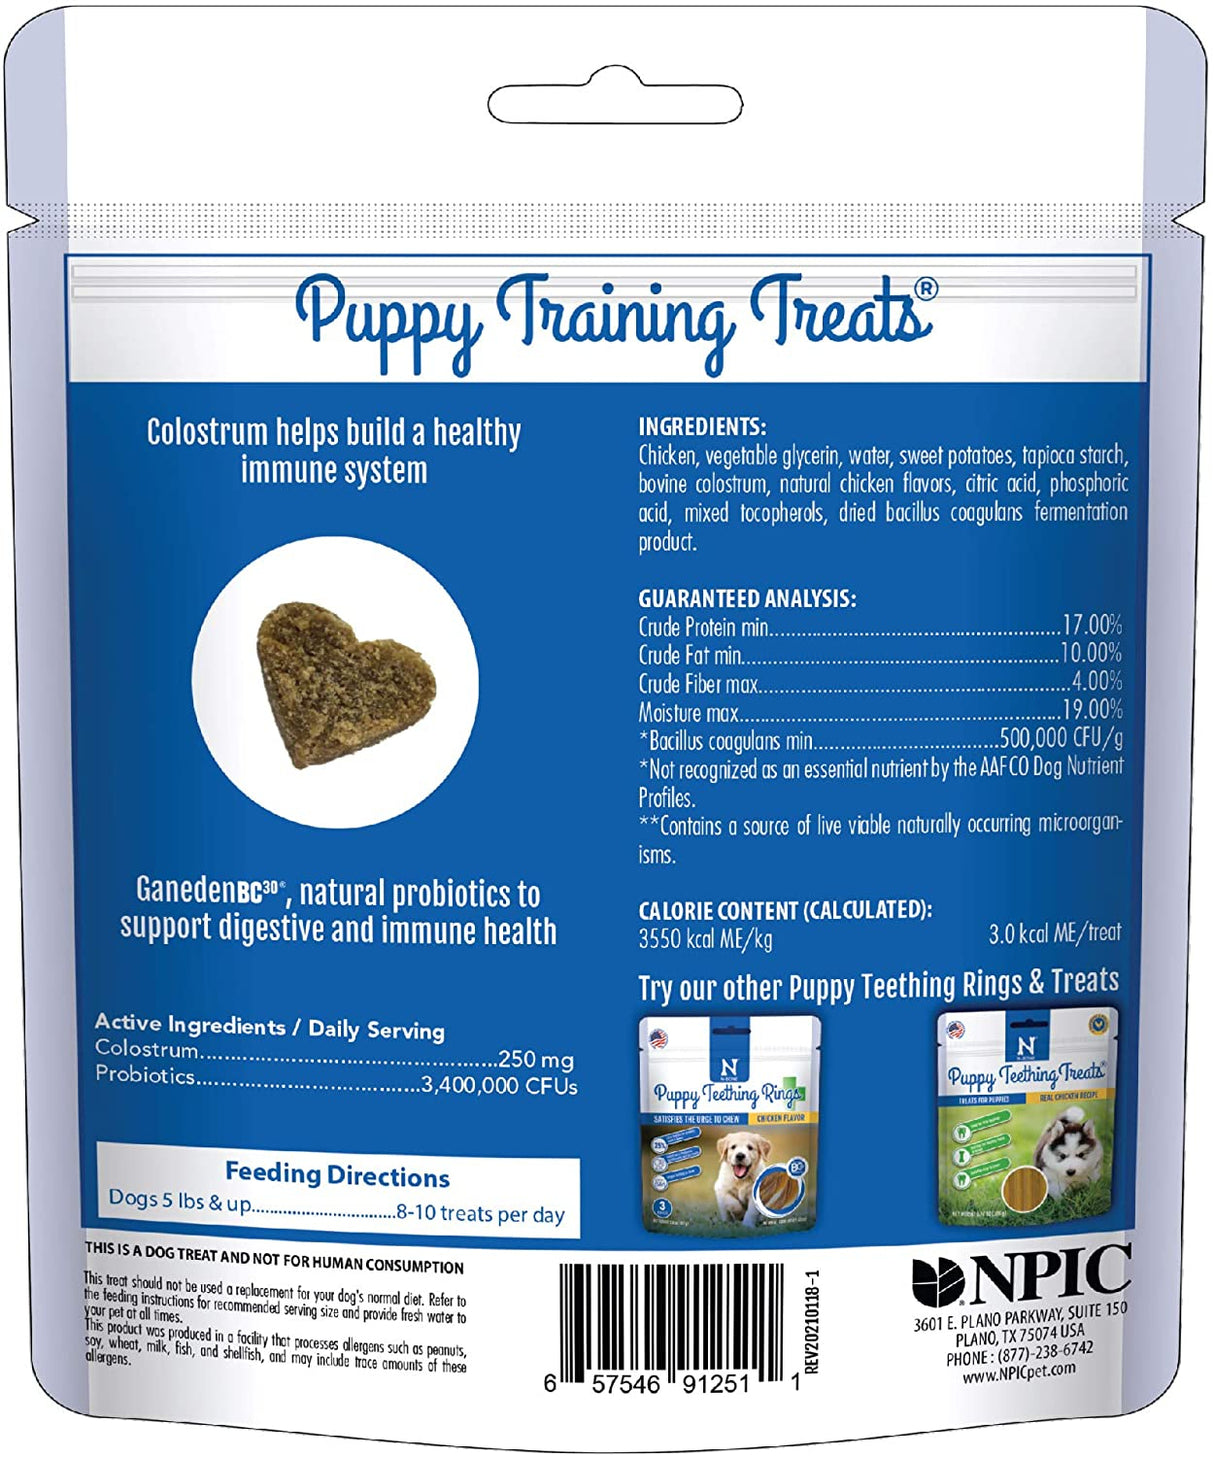 6 oz N-Bone Puppy Training Treats Real Chicken Recipe